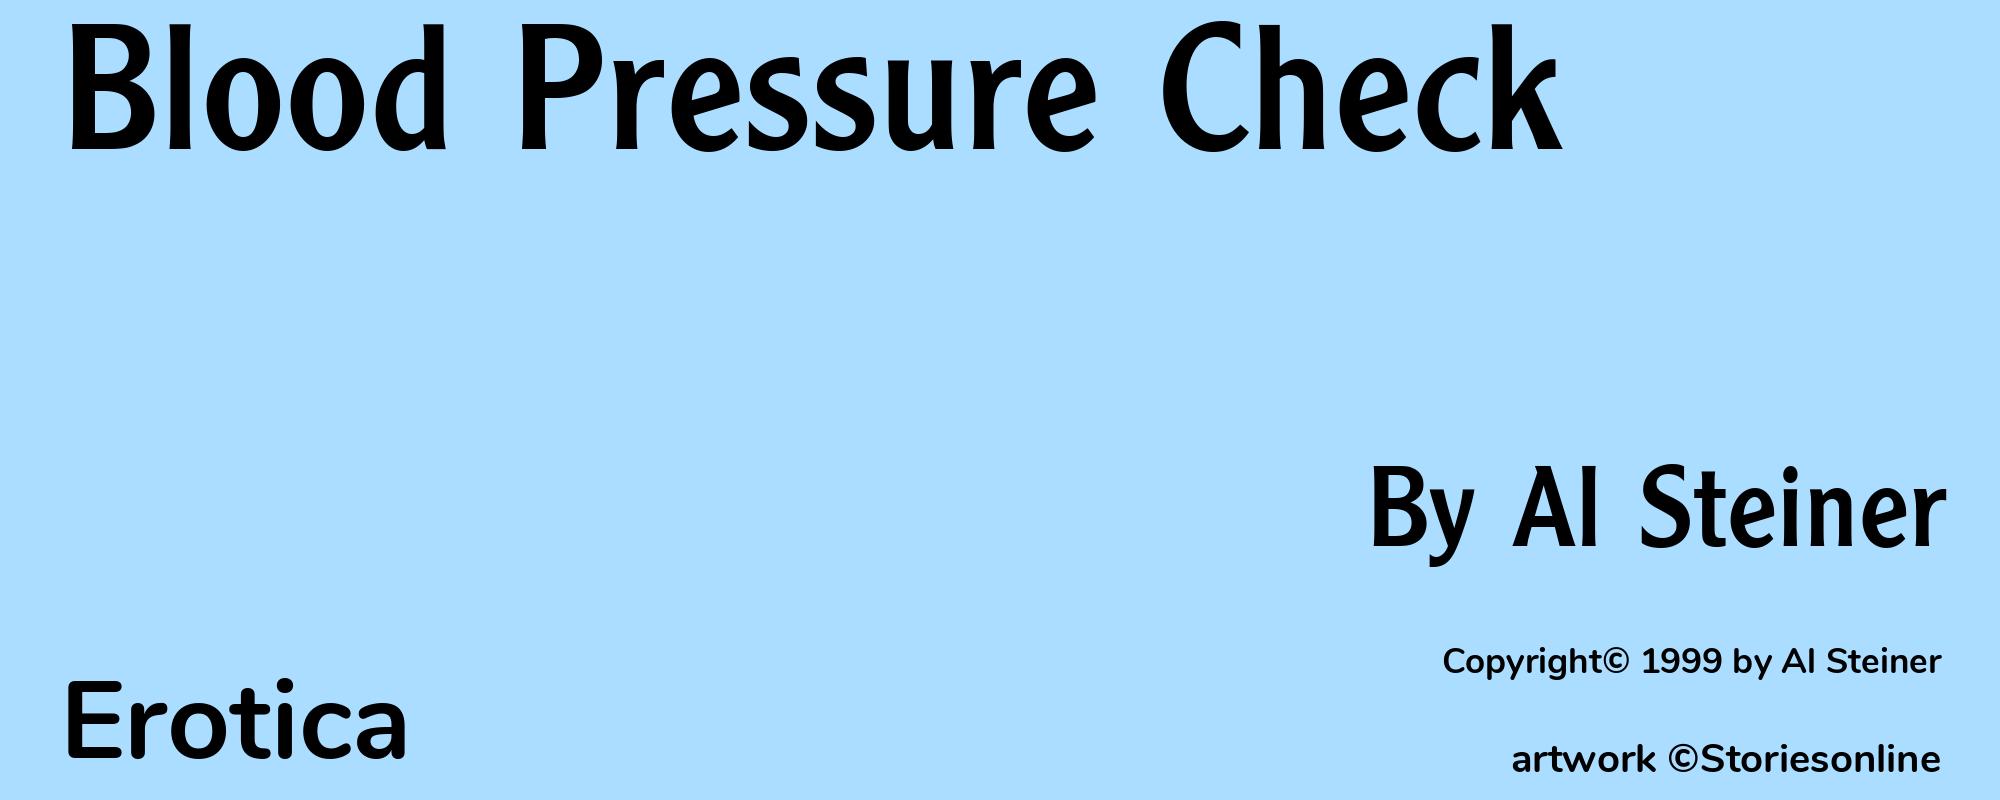 Blood Pressure Check - Cover